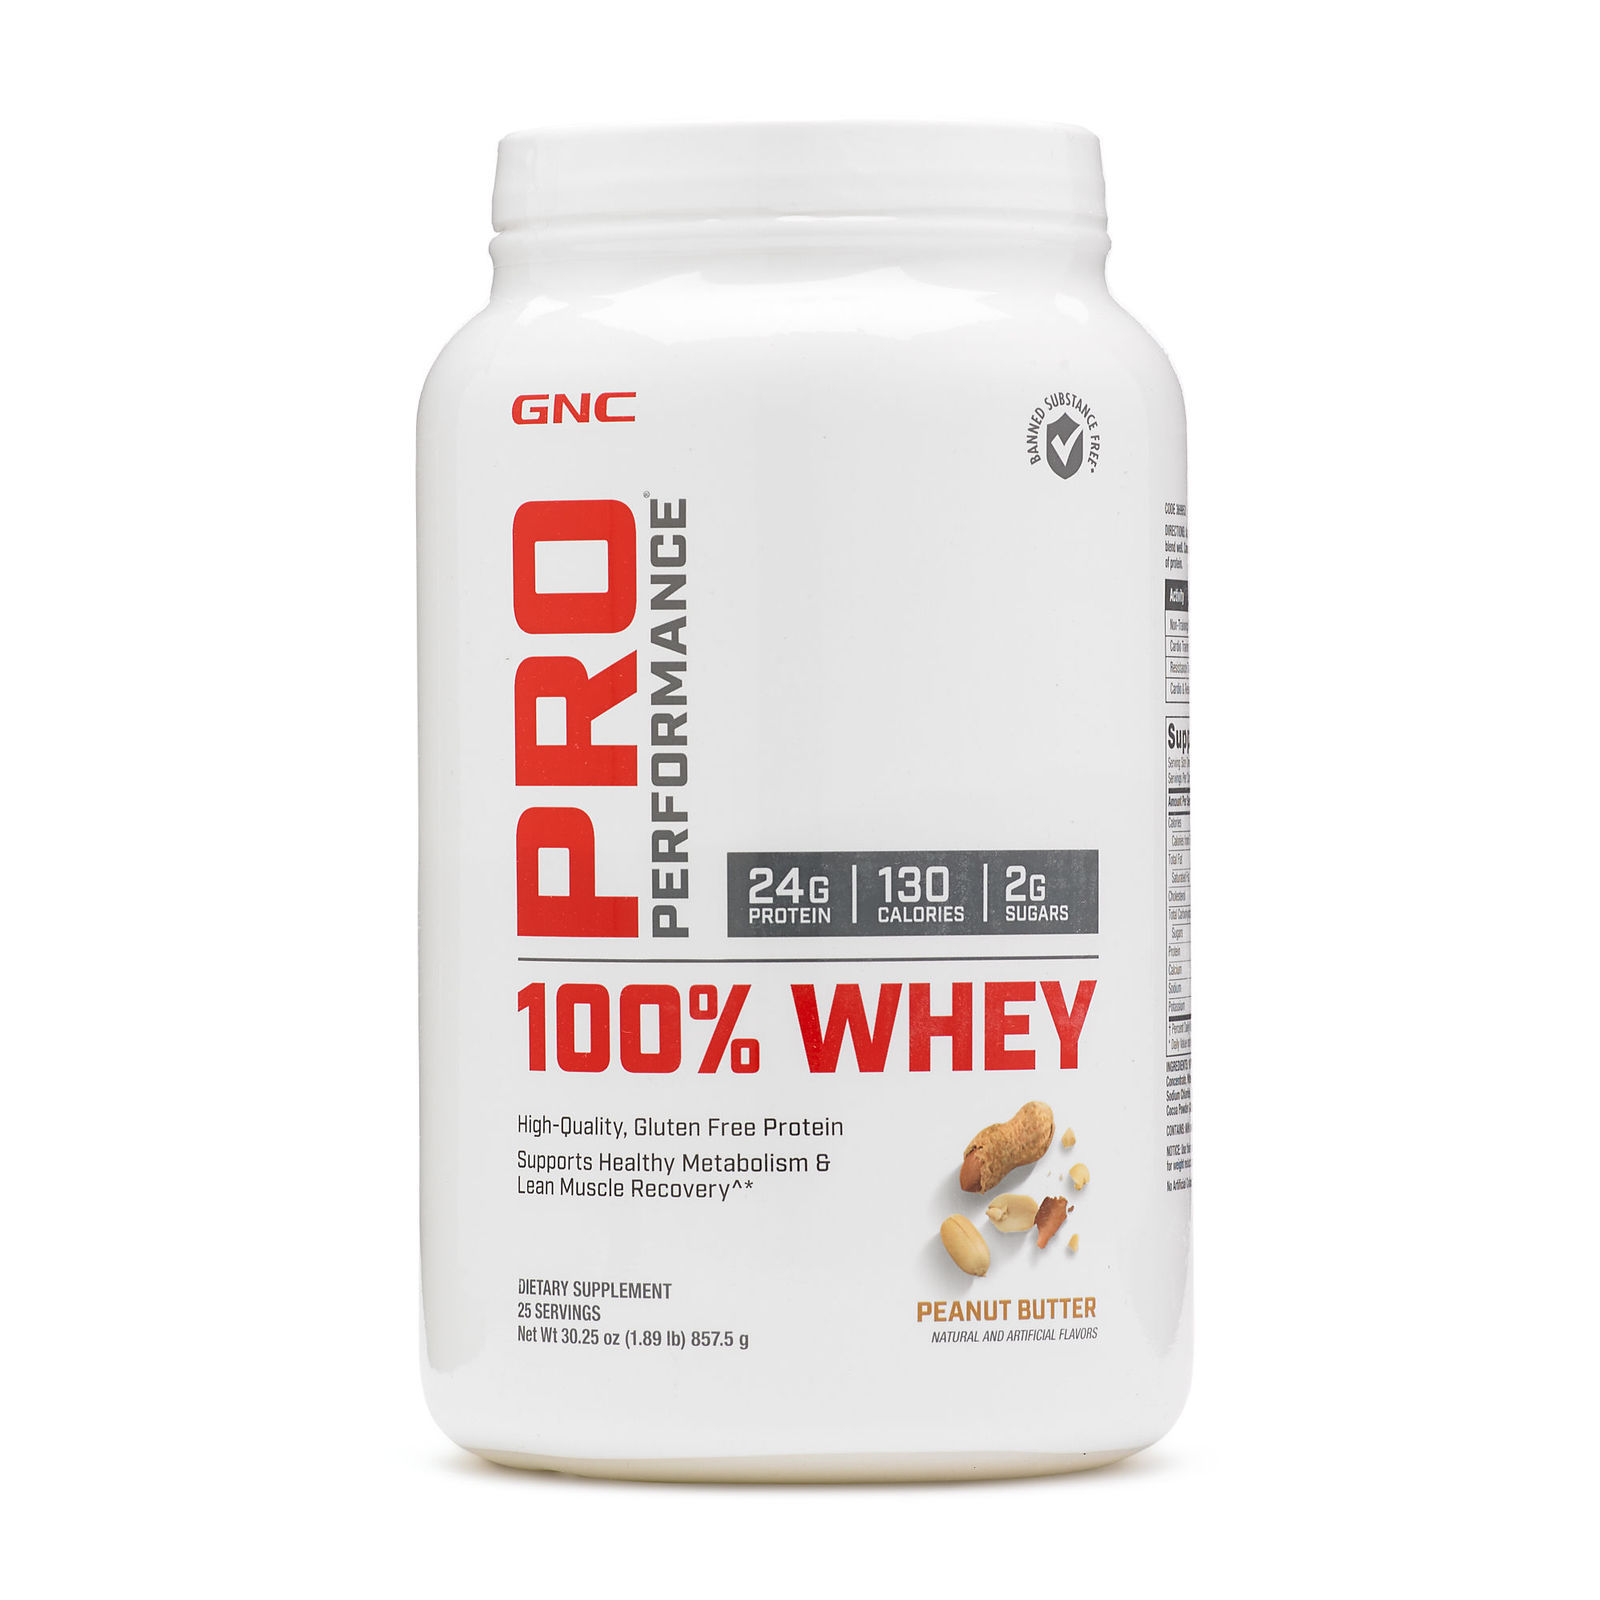 GNC PRO-PERFORMANCE 100% WHEY (Peanut Butter) Dietary Supplement net.wt.(1.89lb) - $24.77